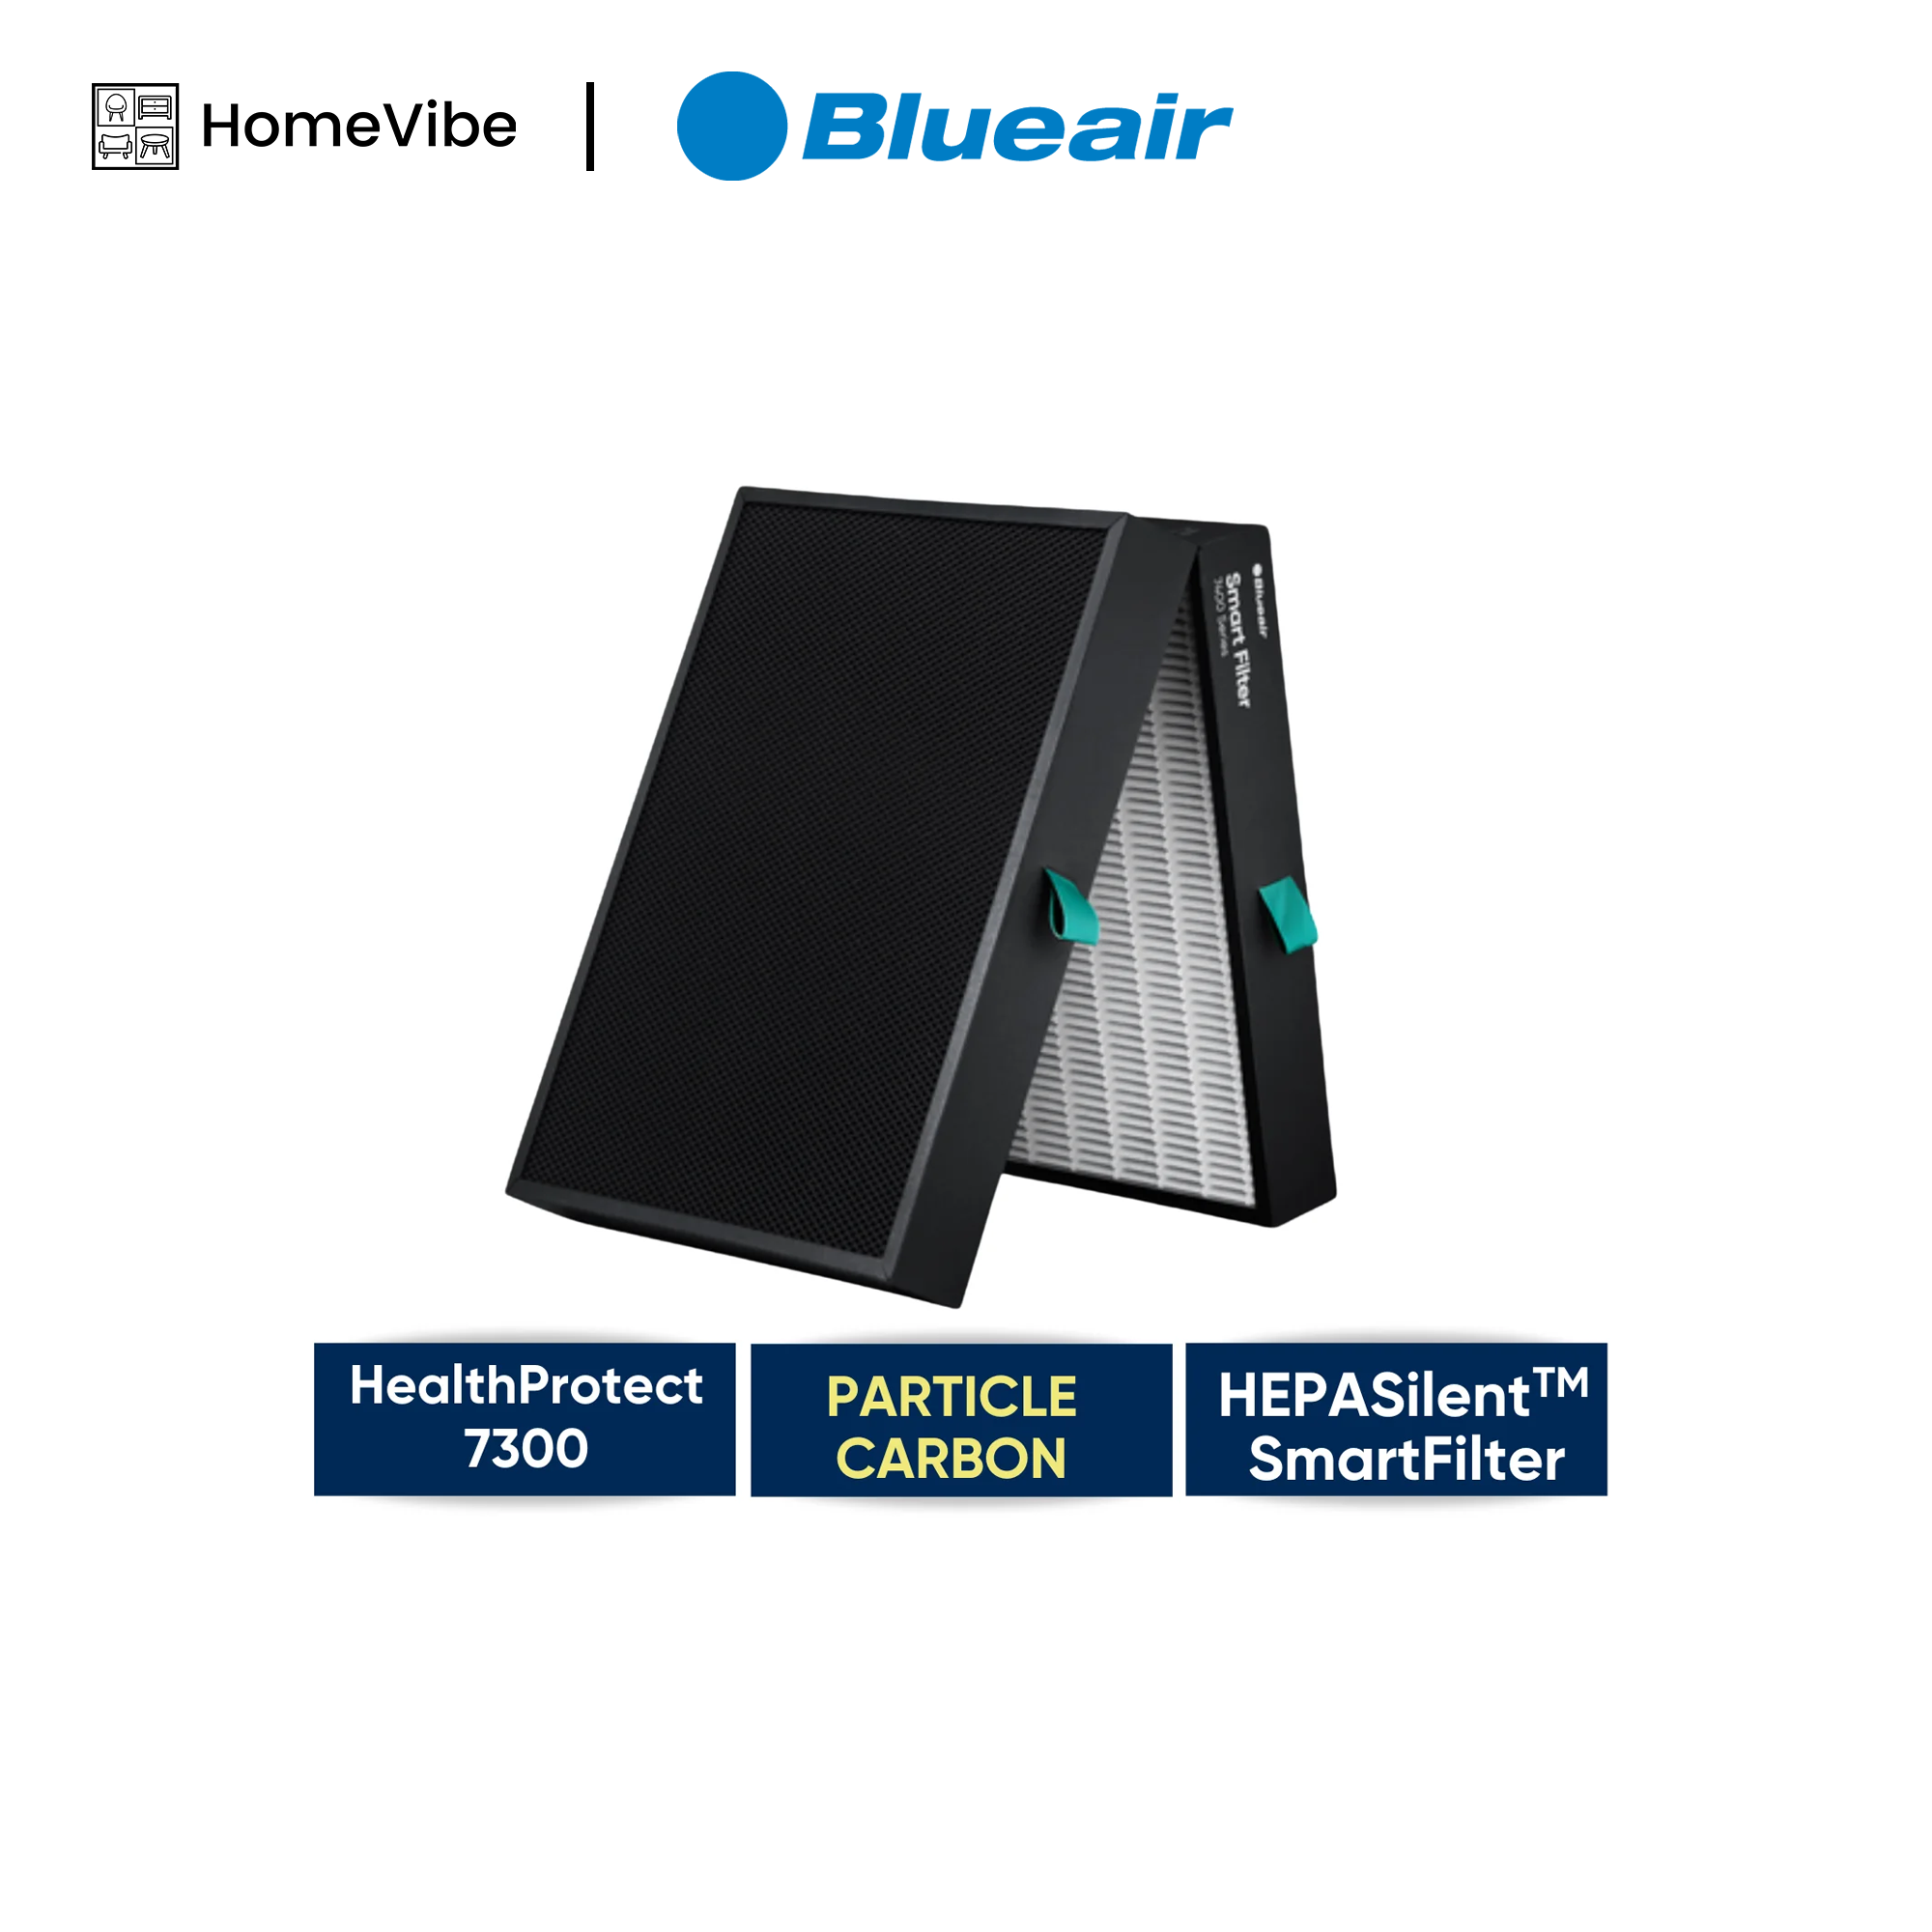 Blueair HealthProtect 7300 SmartFilter